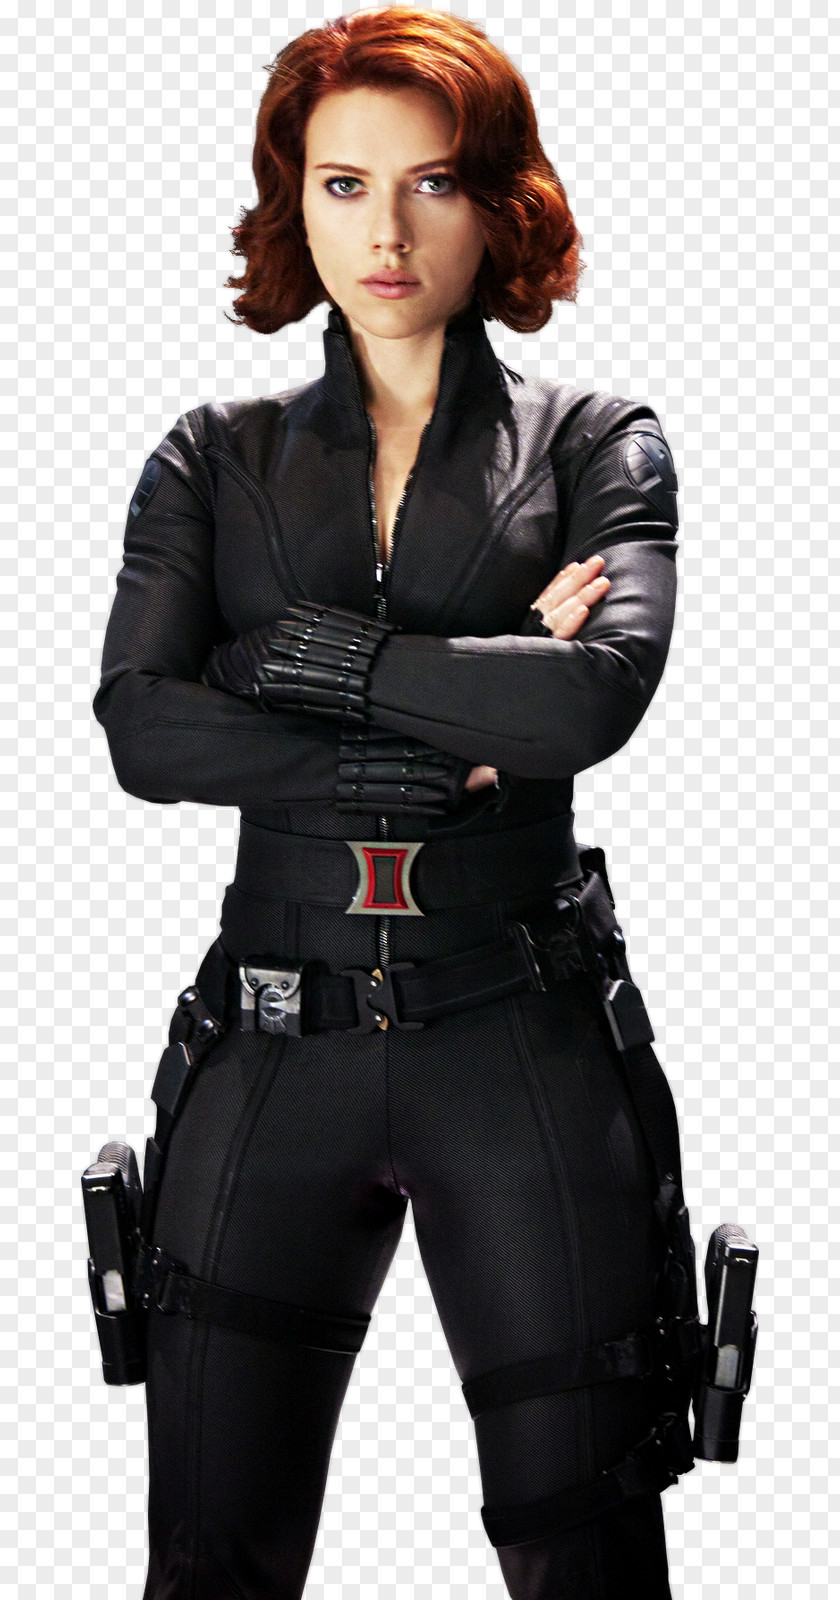 Viuva Negra Scarlett Johansson Black Widow Marvel Avengers Assemble Clint Barton Captain America PNG